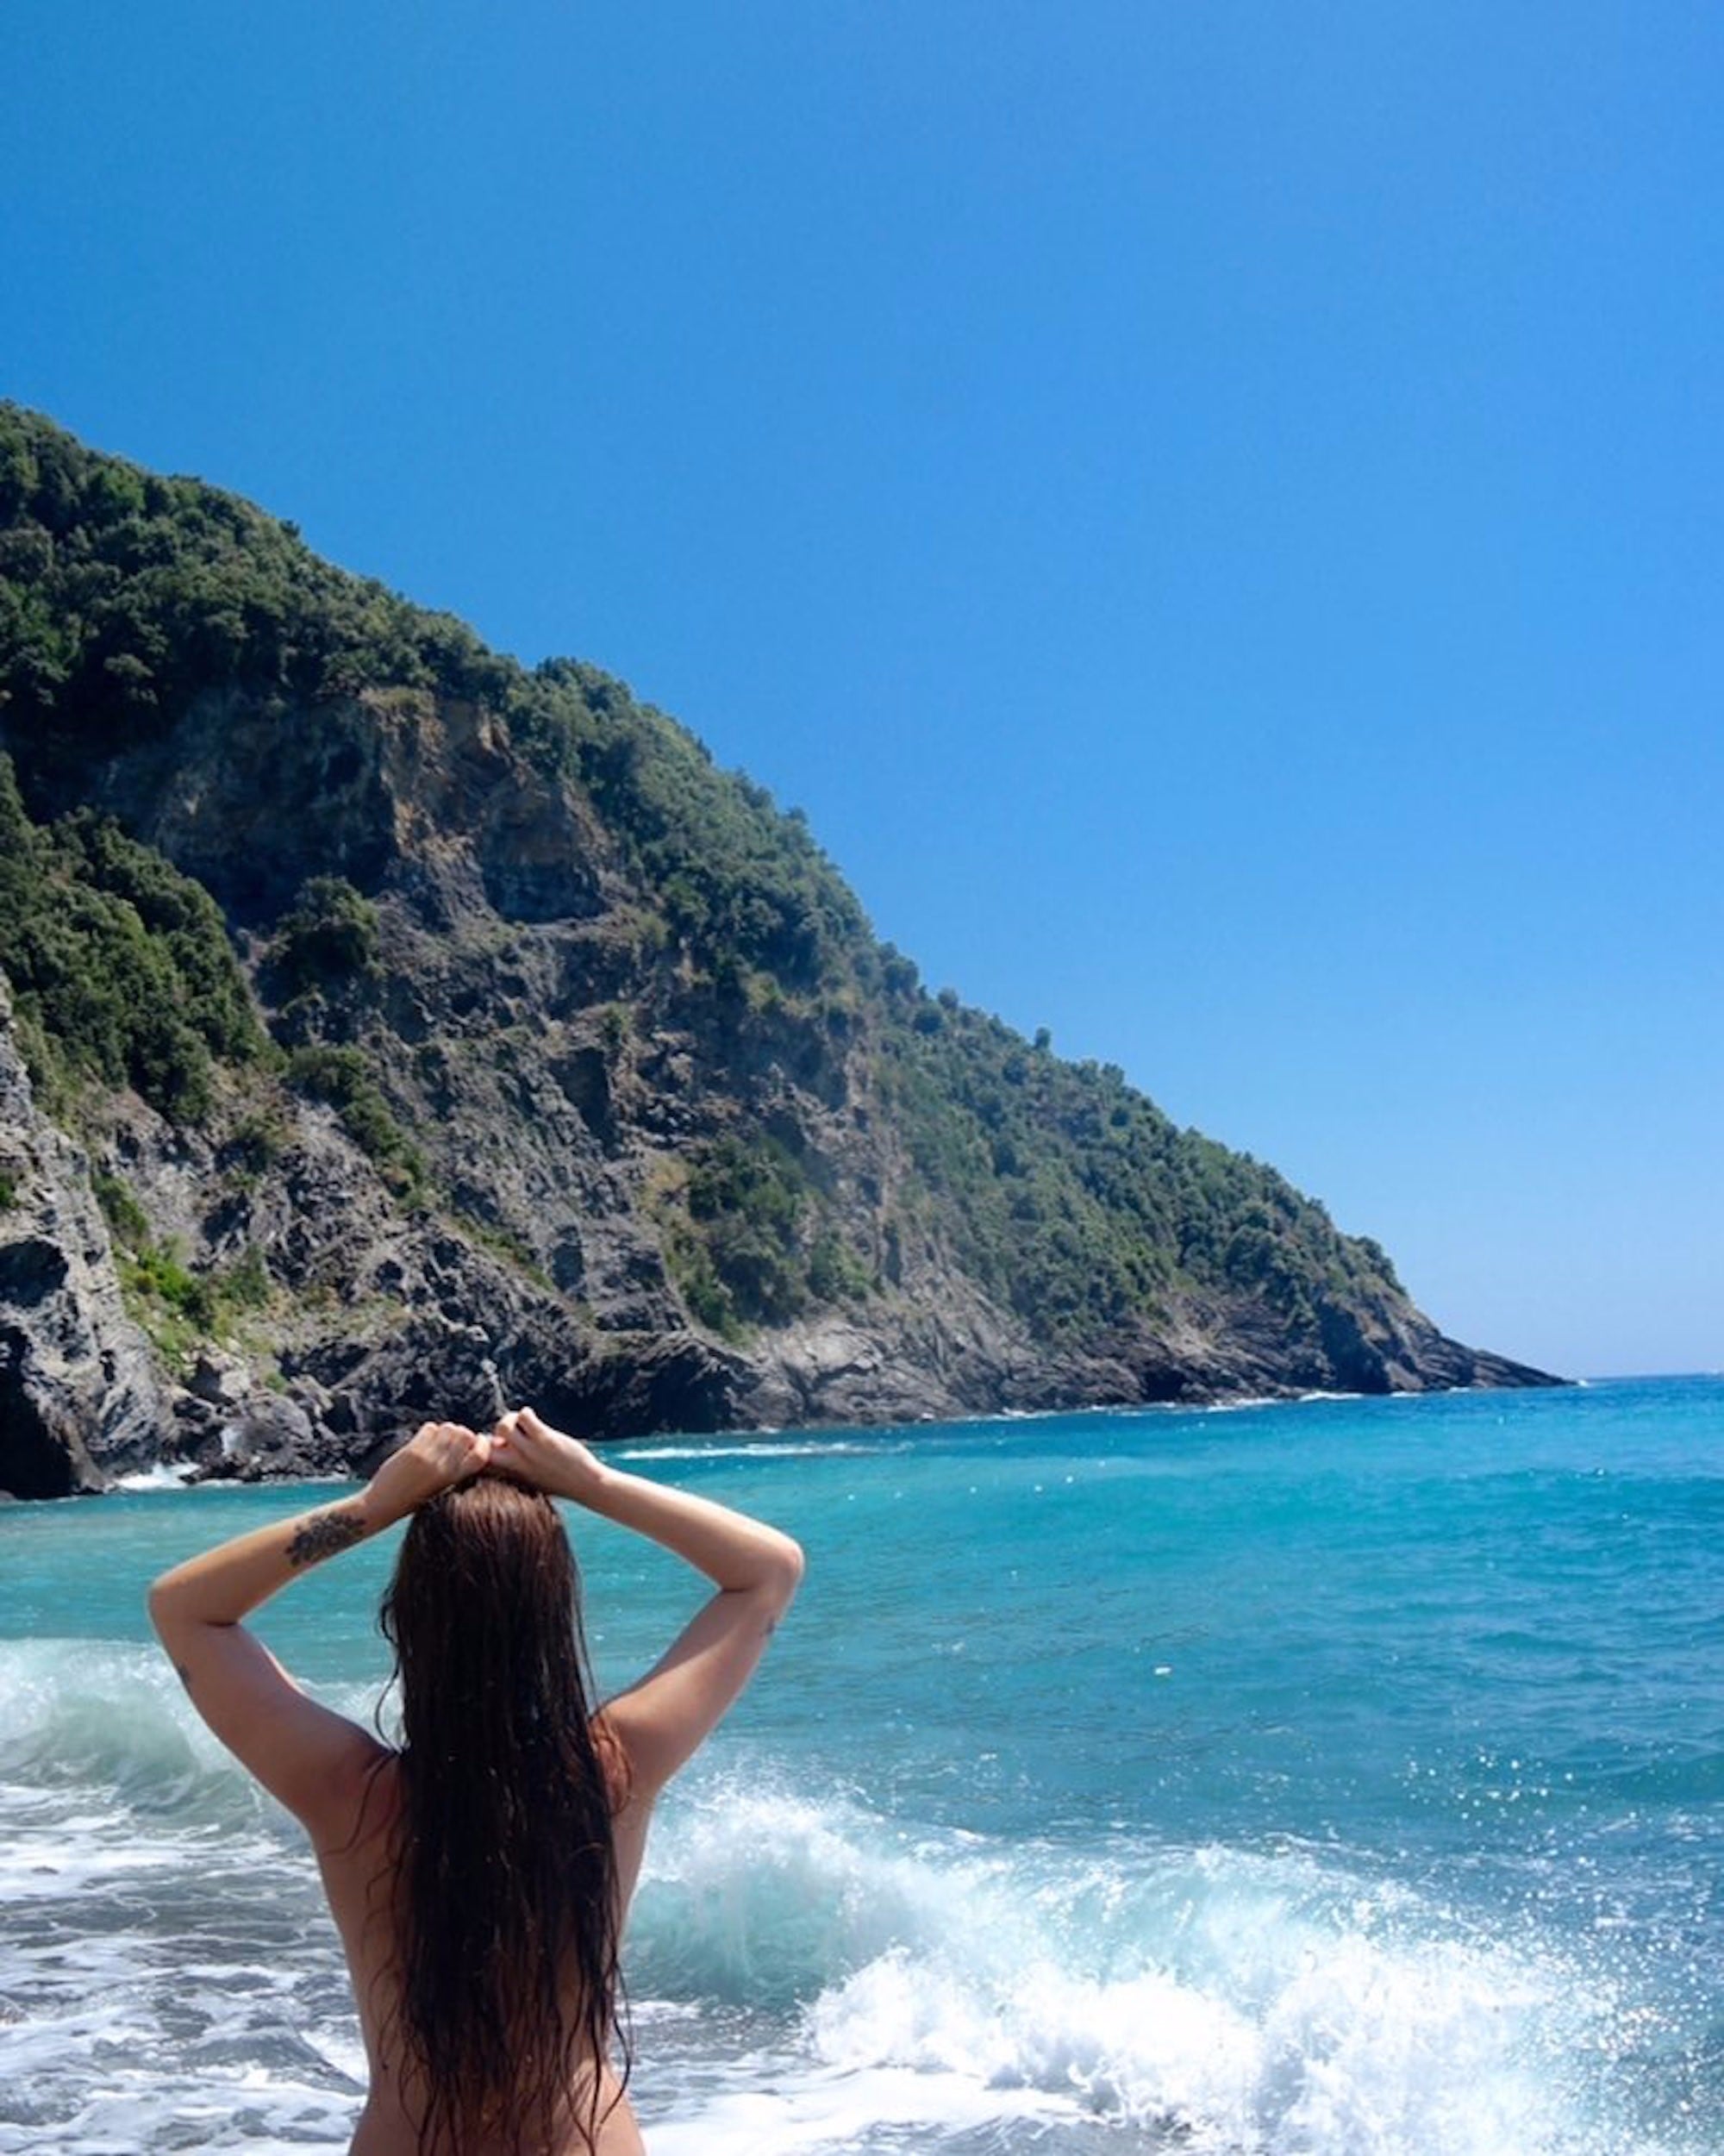 chelsy munson share sexy nudist beach photos